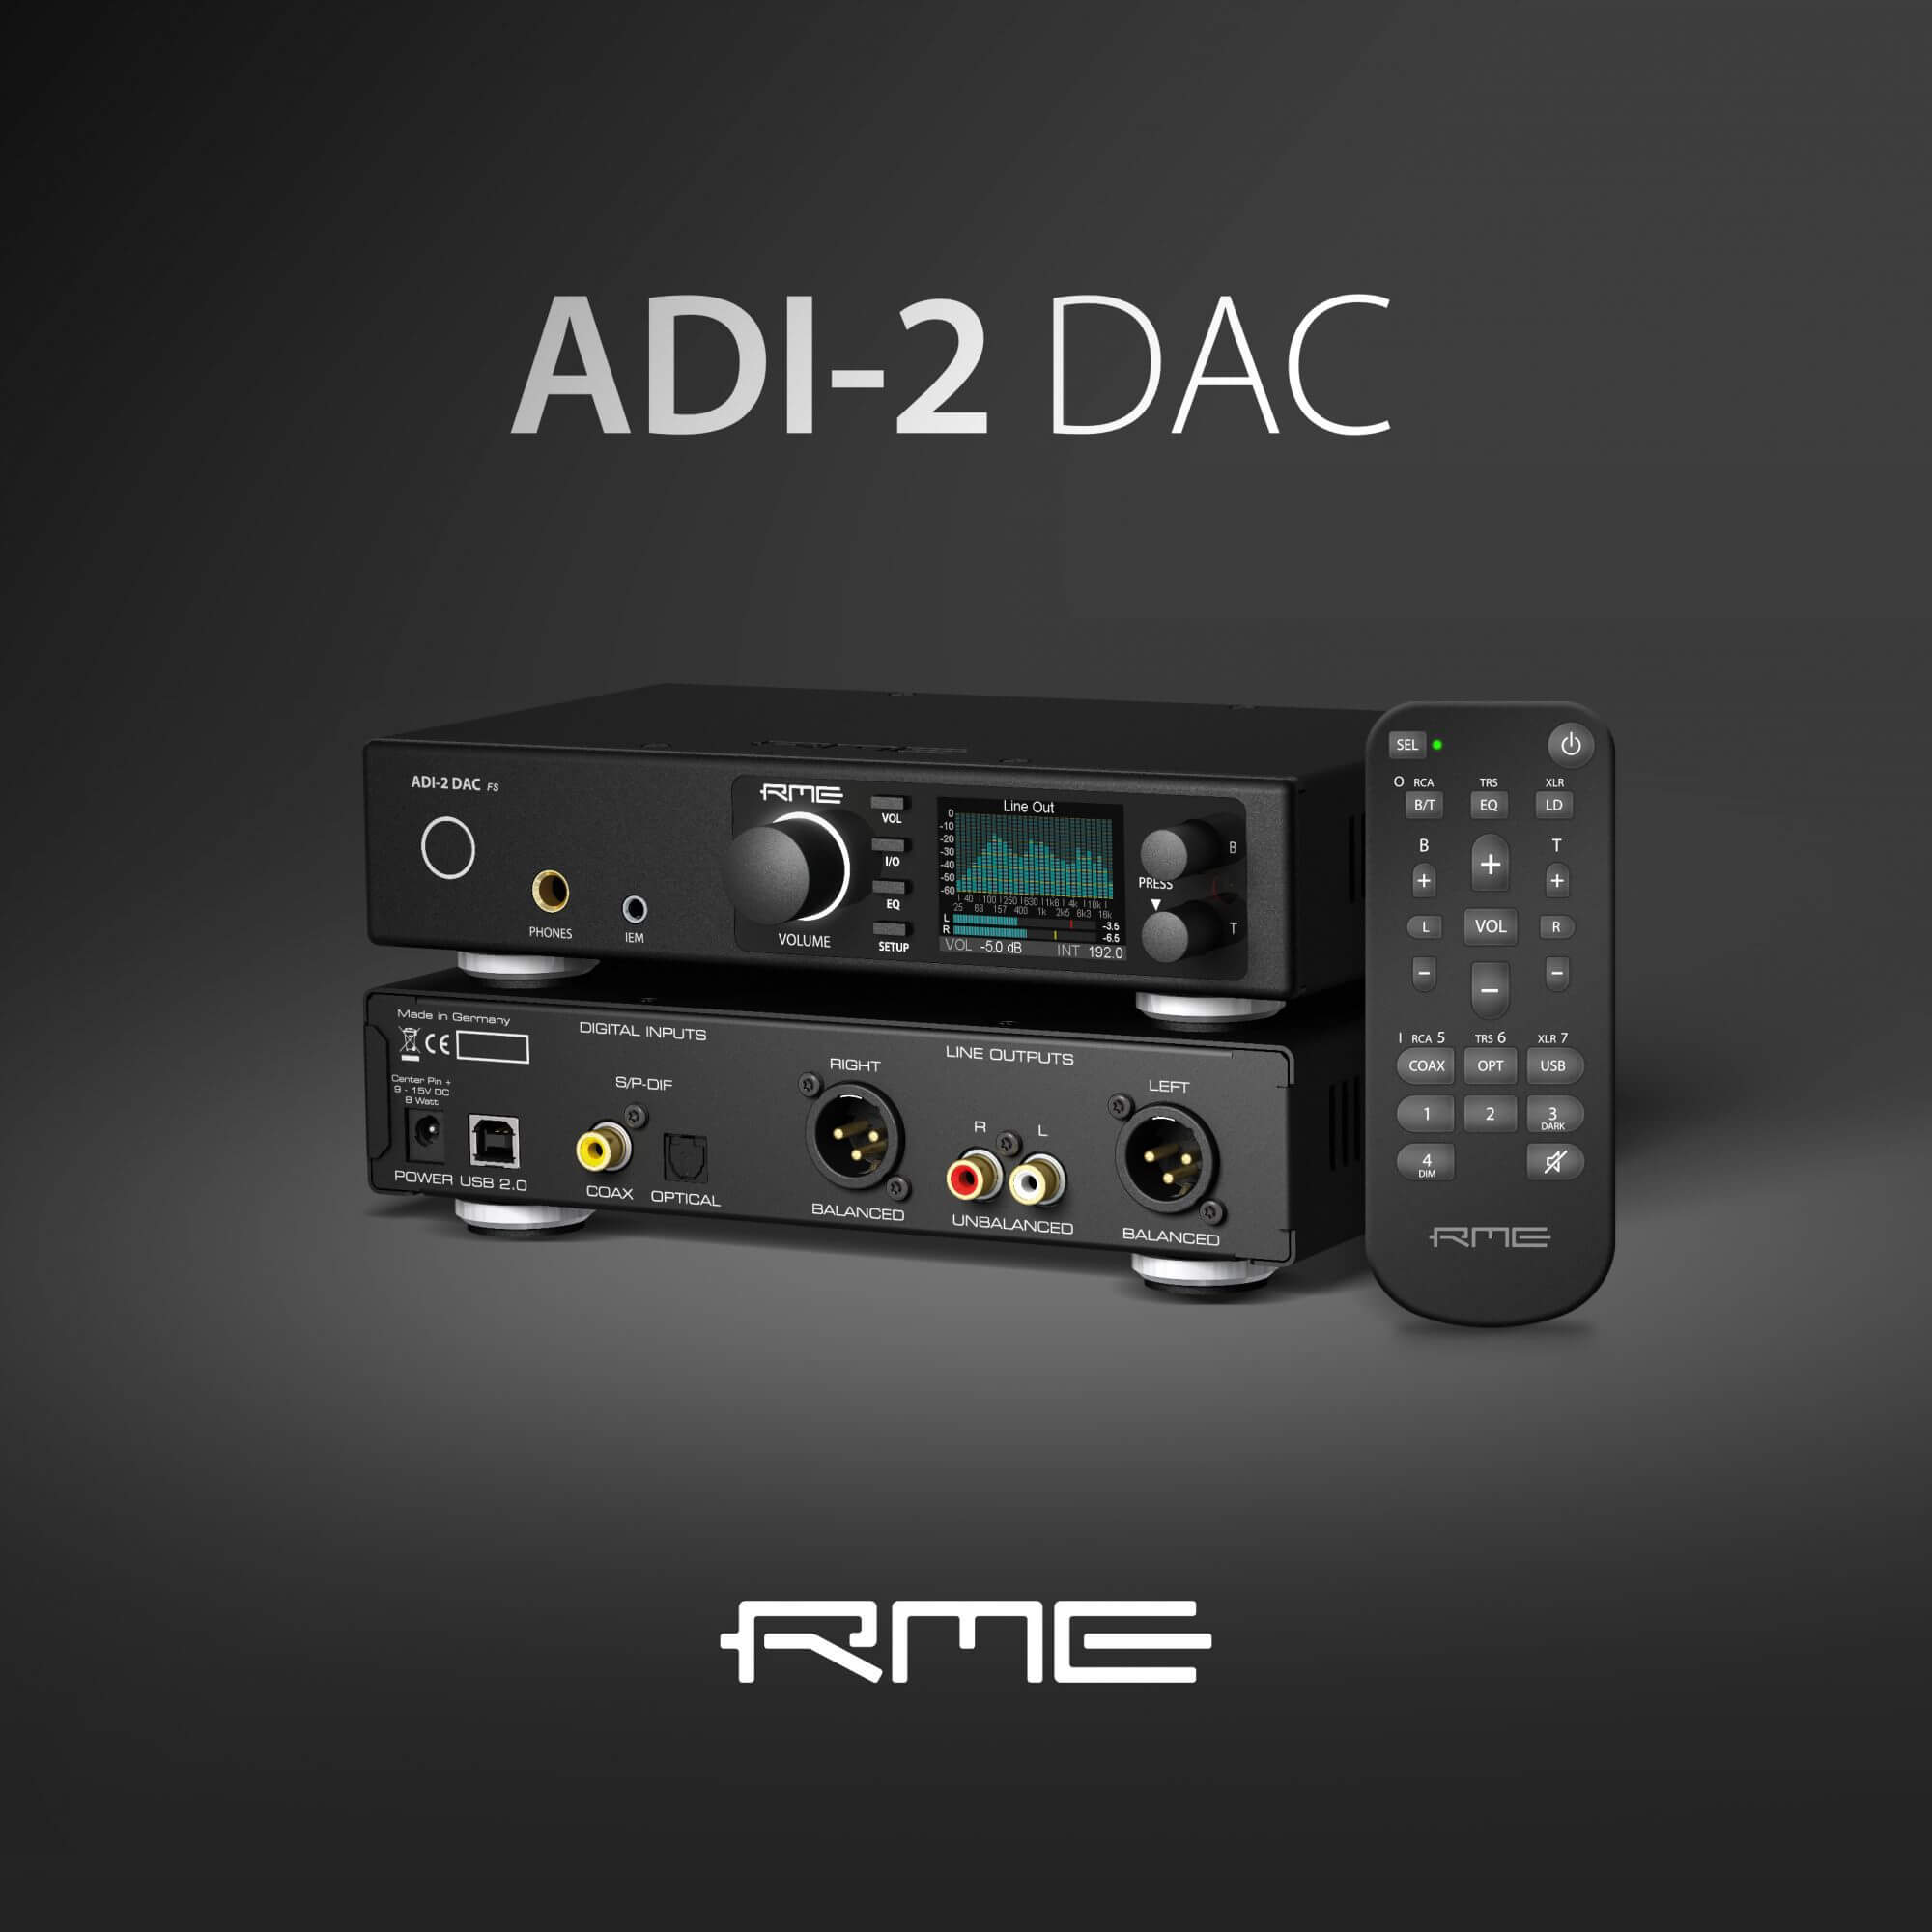 The new ADI-2 DAC FS